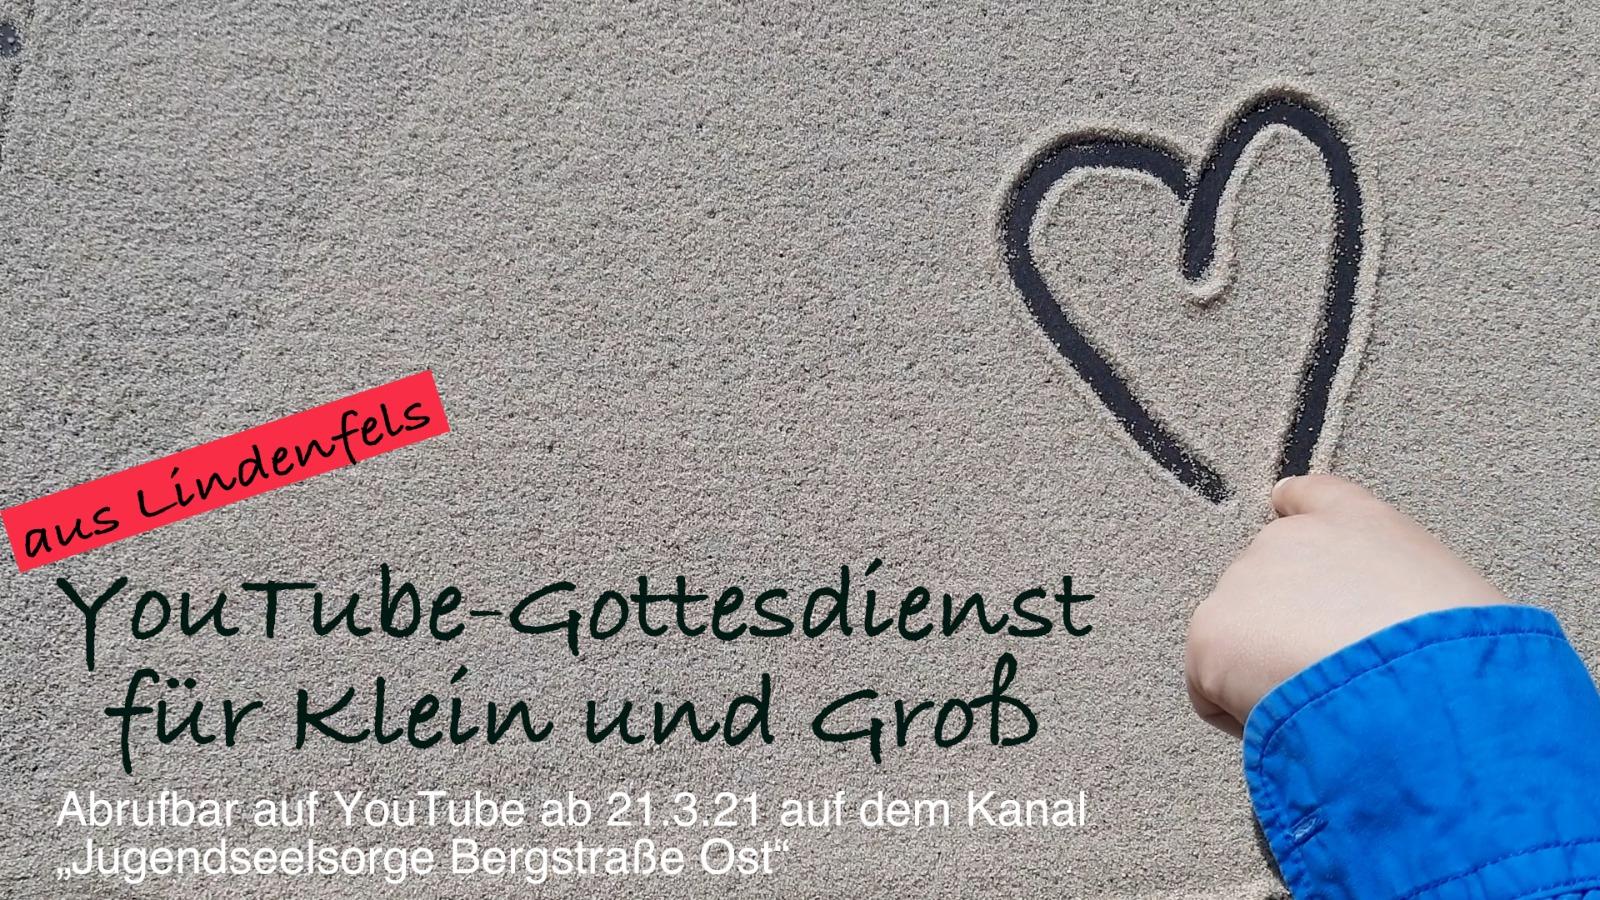 Flyer für YouTube-Familiengottesdienst in Lindenfels